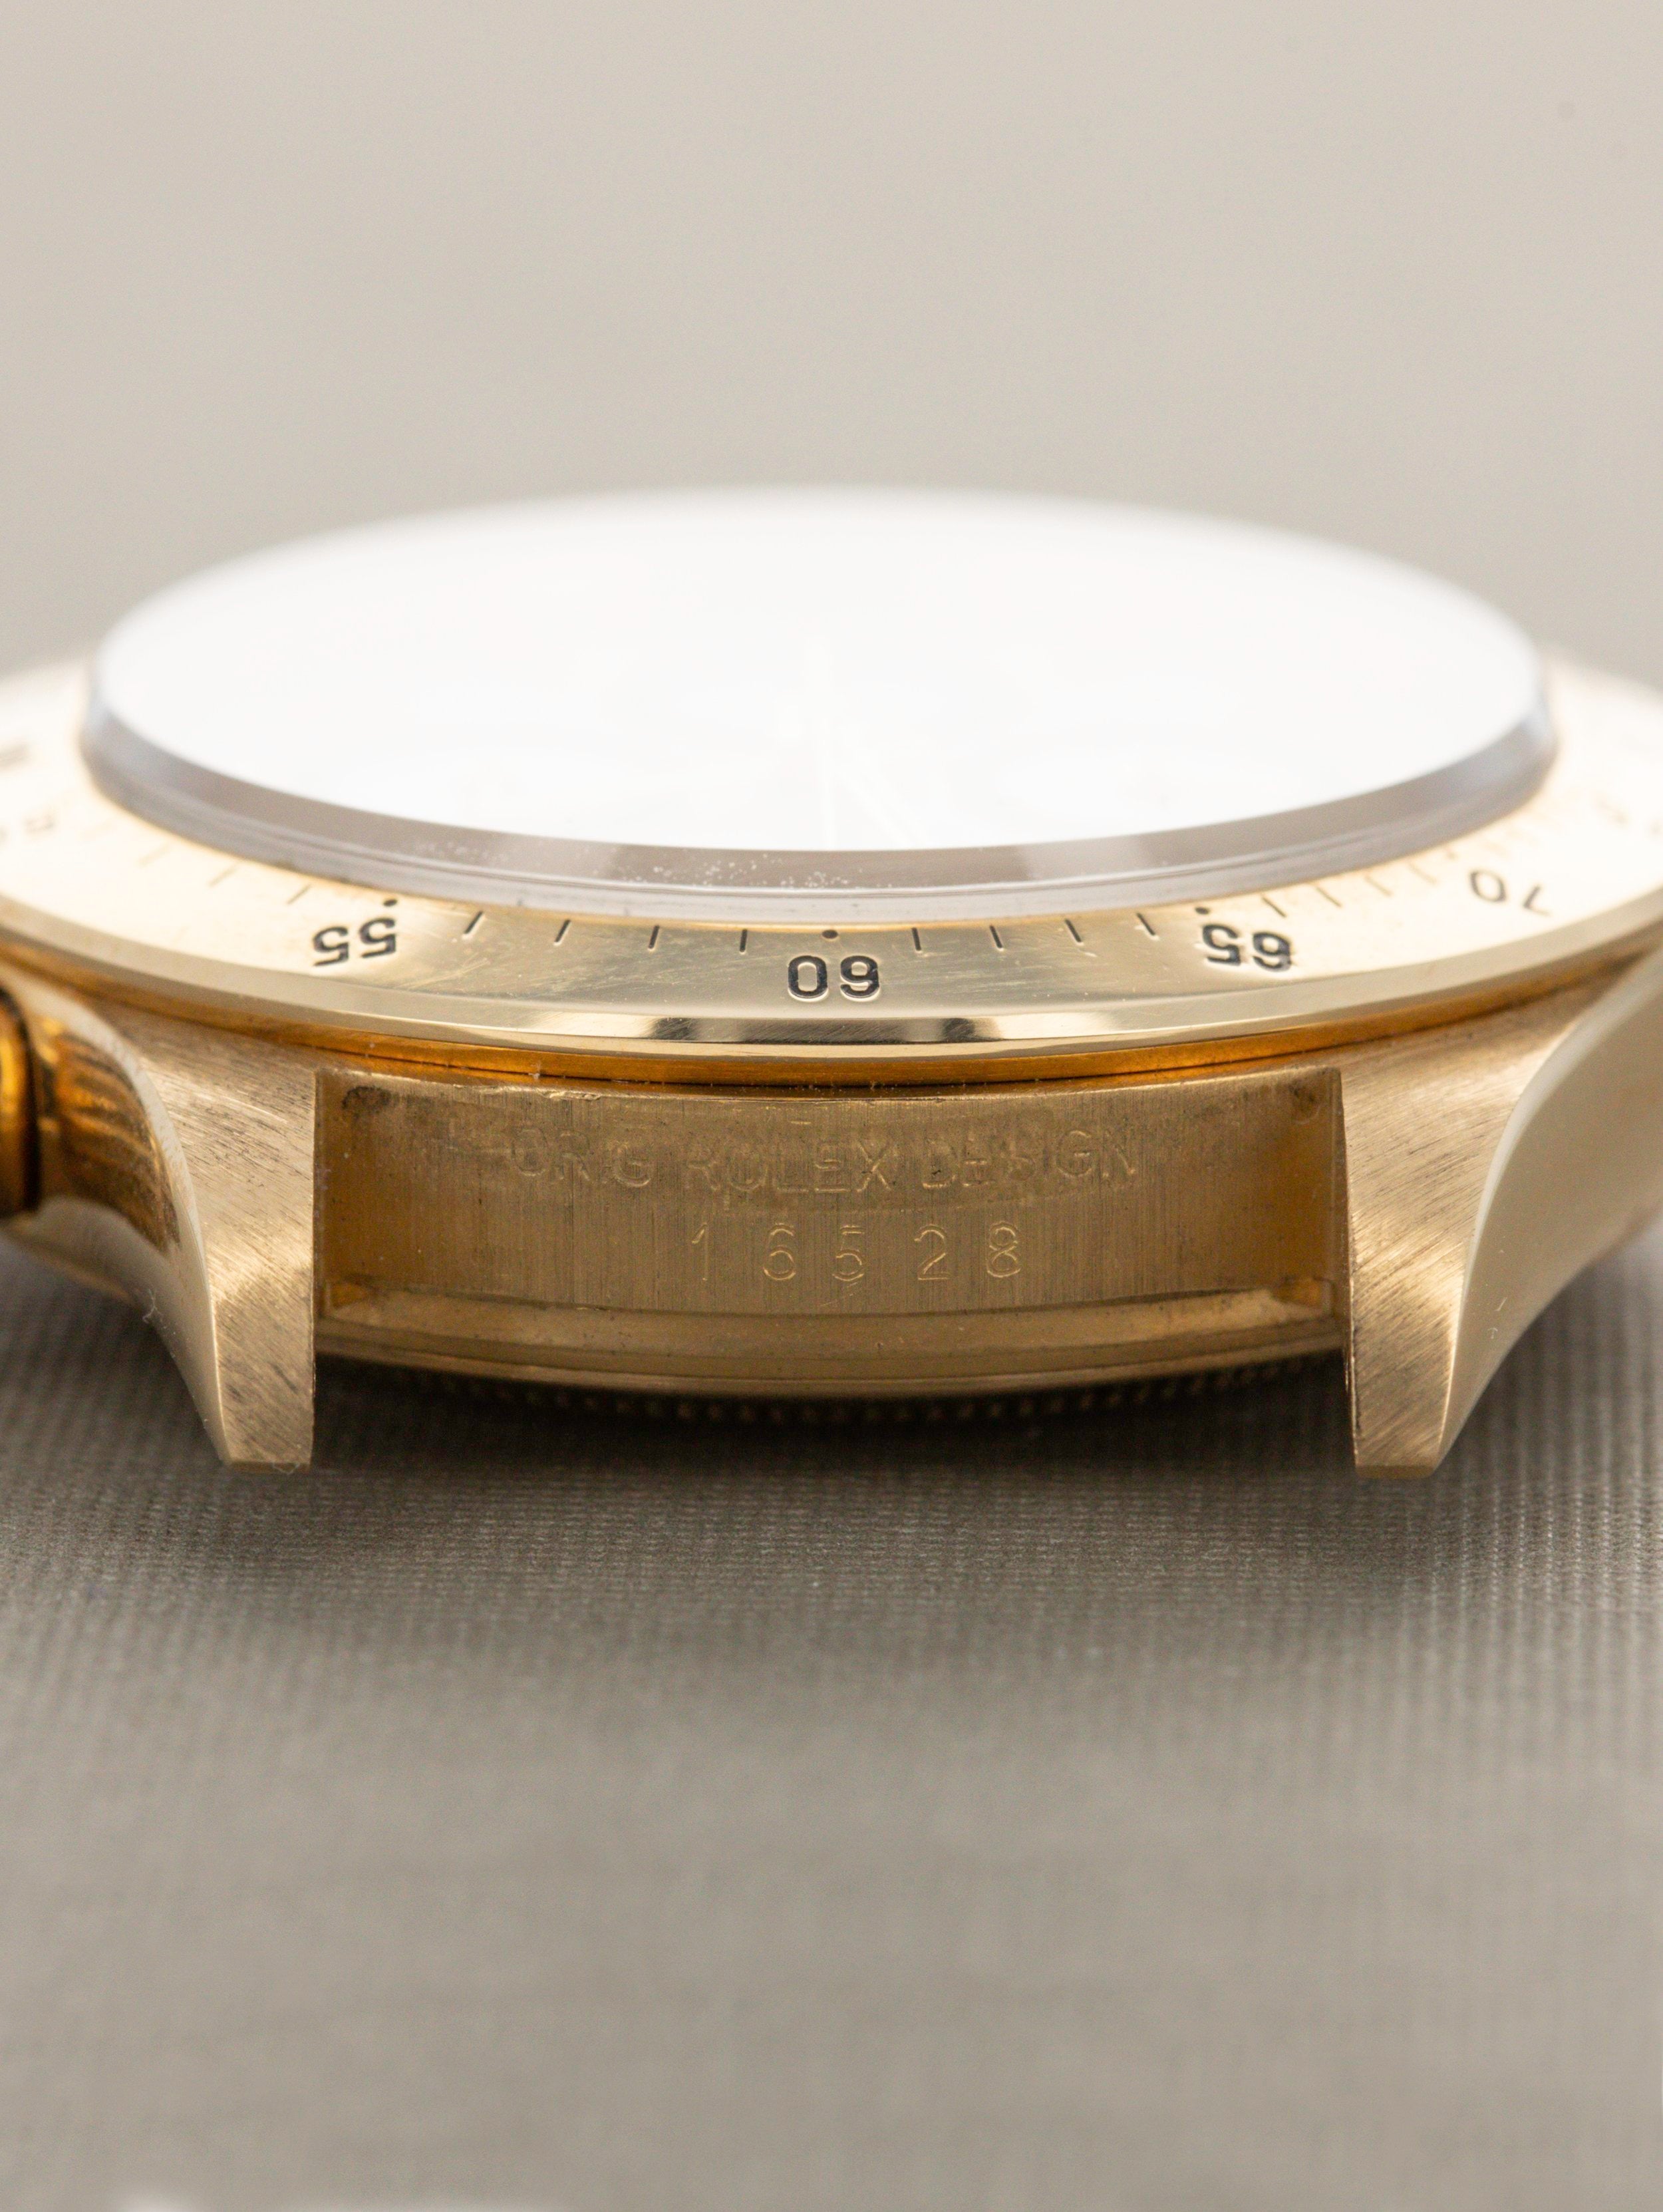 Rolex Daytona Ref. 16528 - 'Floating Cosmograph' Porcelain Dial